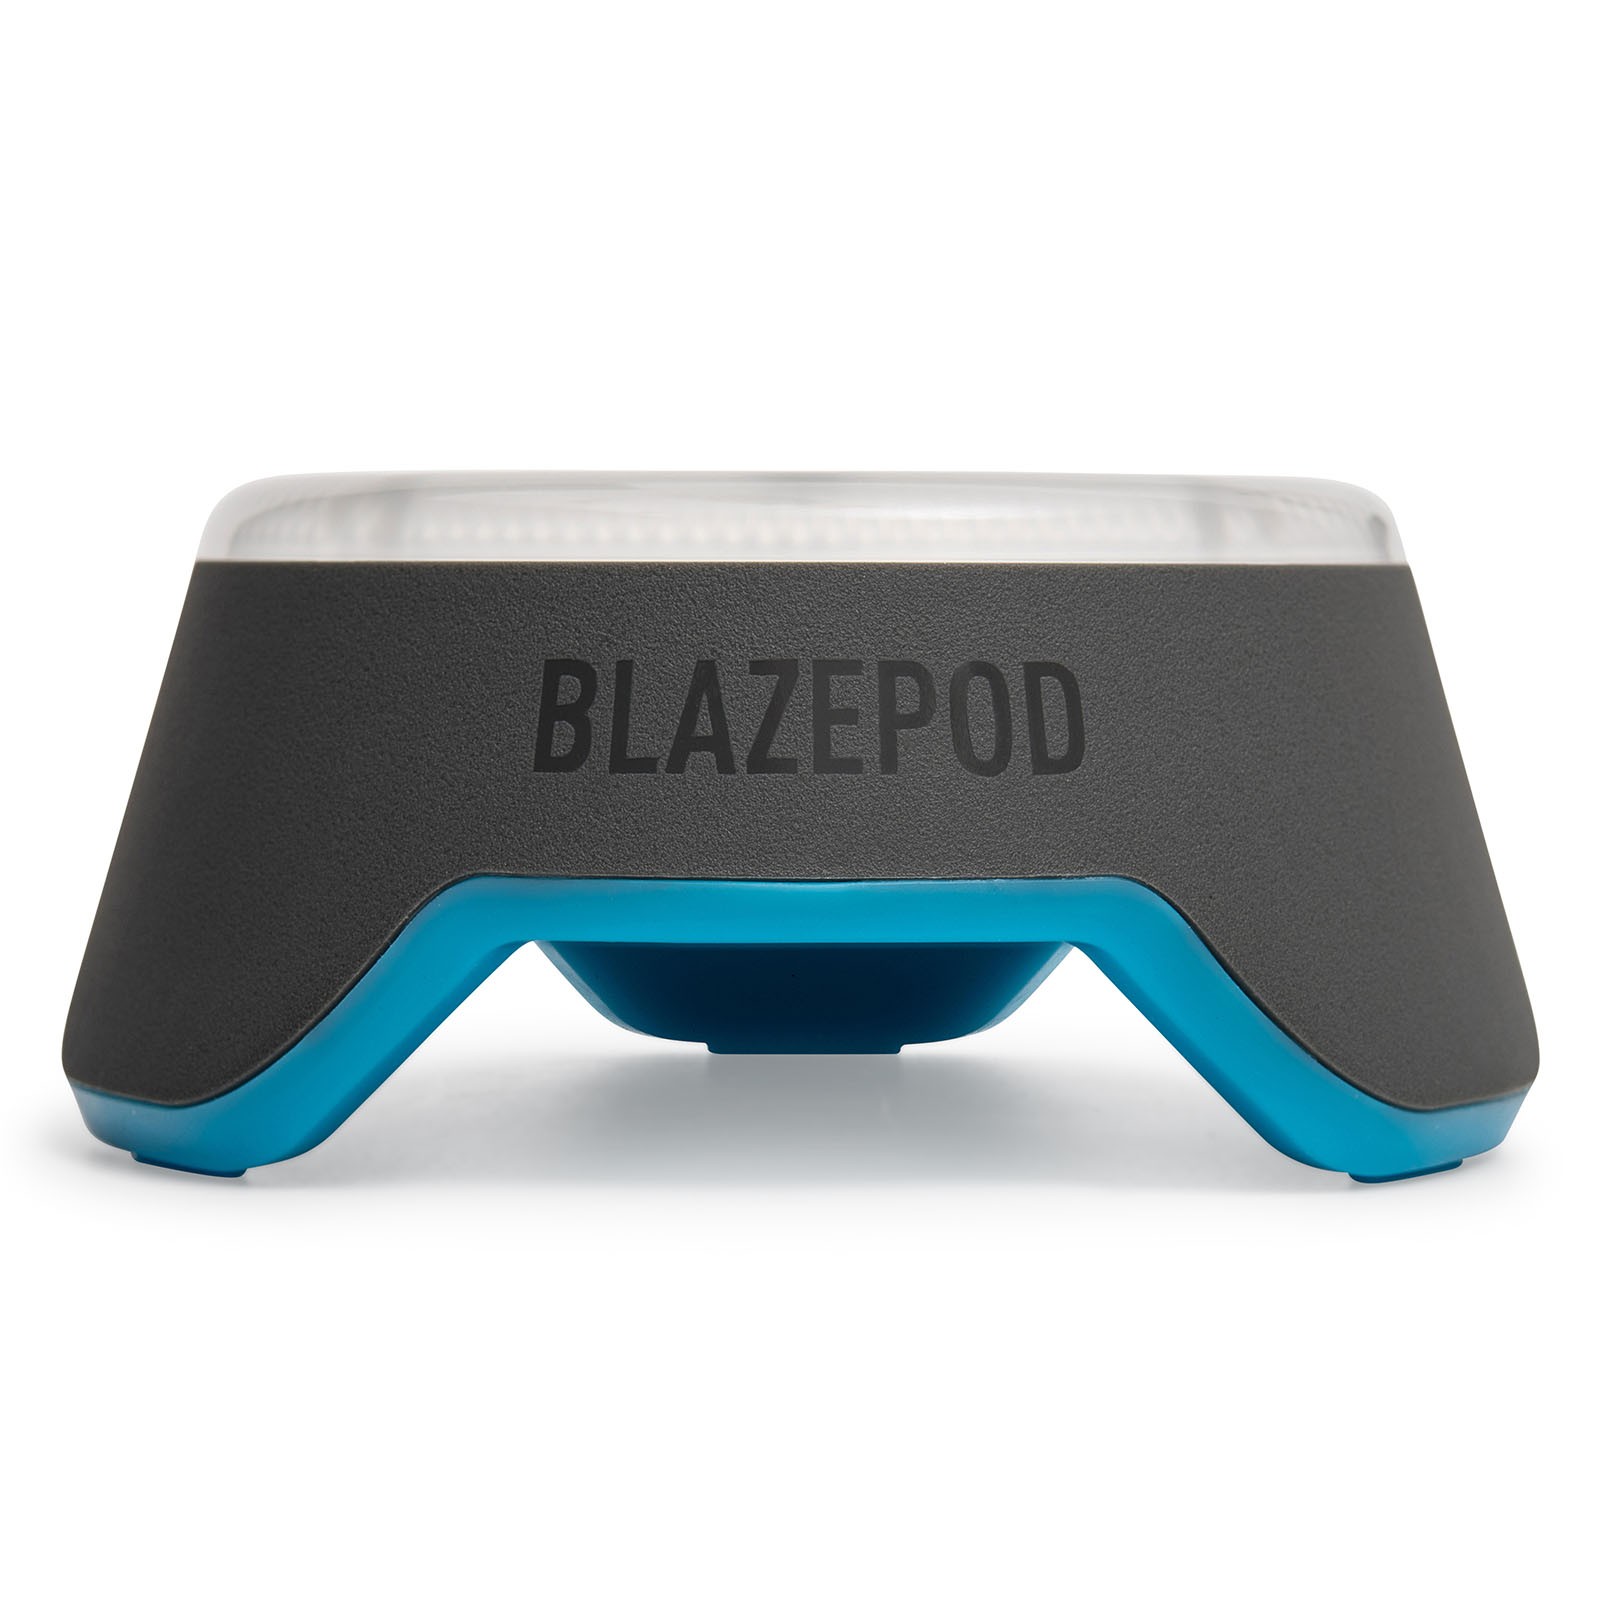 Blazepod - Trainer Kit